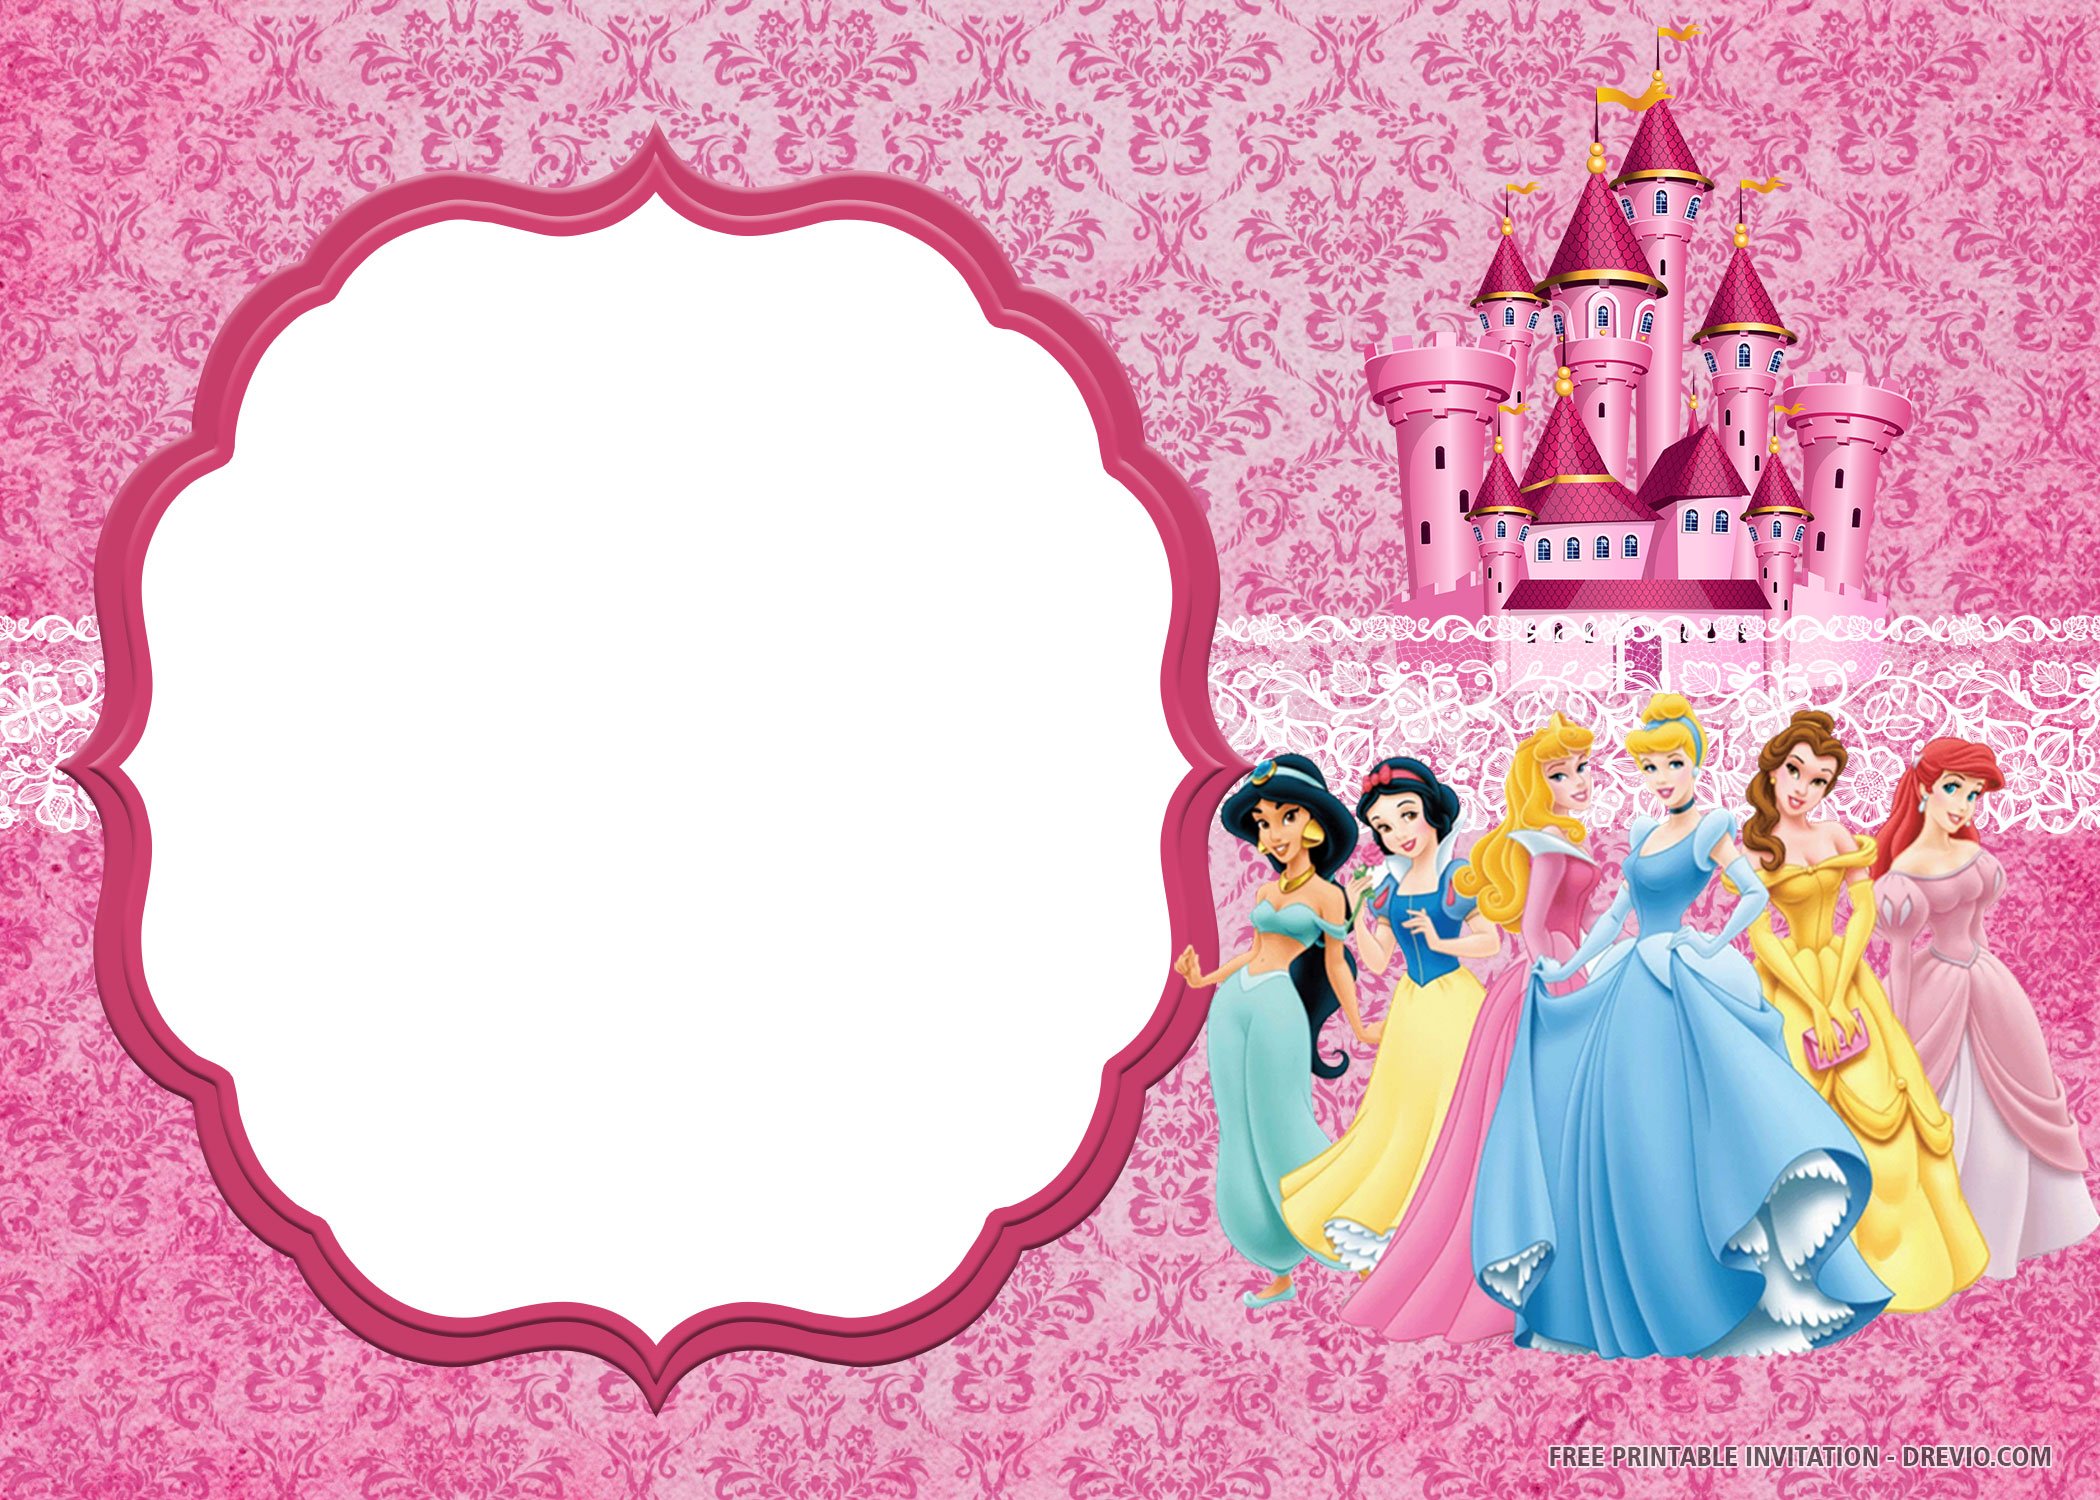 Free Printable Disney Princess Invitation Templates Download Hundreds FREE PRINTABLE Birthday